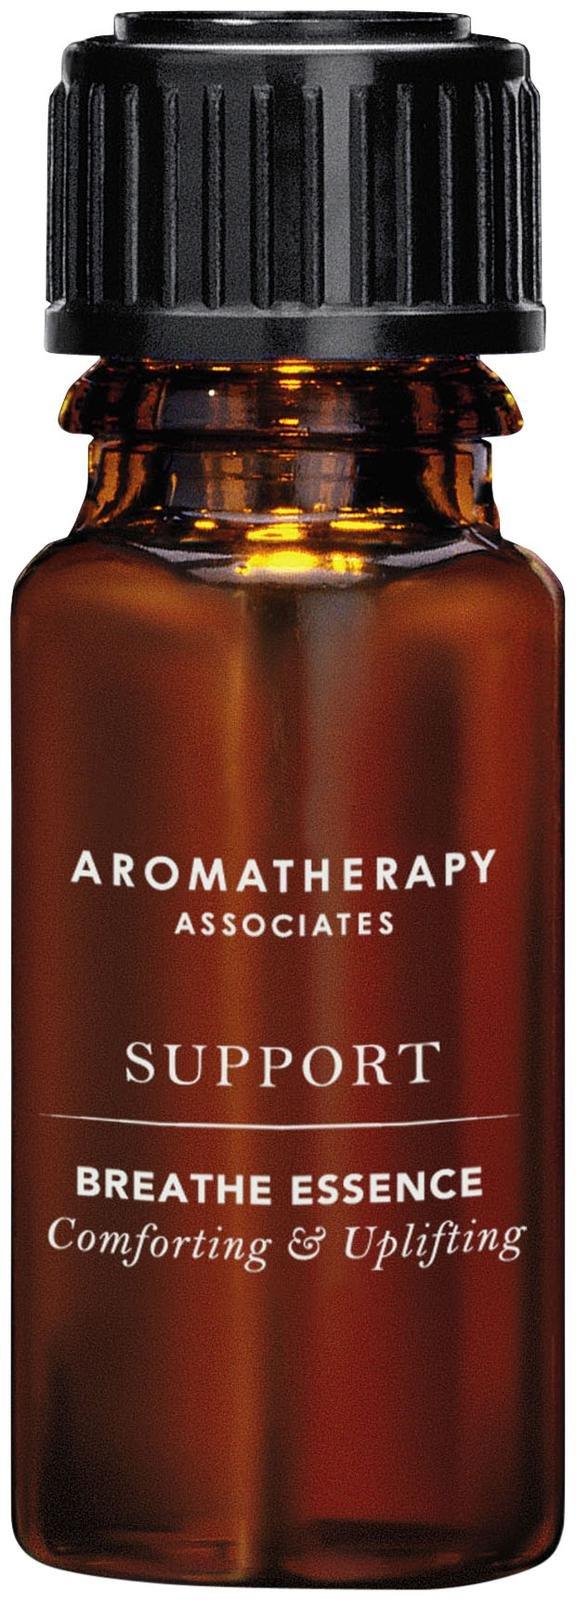 Aromatherapy Associates Support Breathe Essence